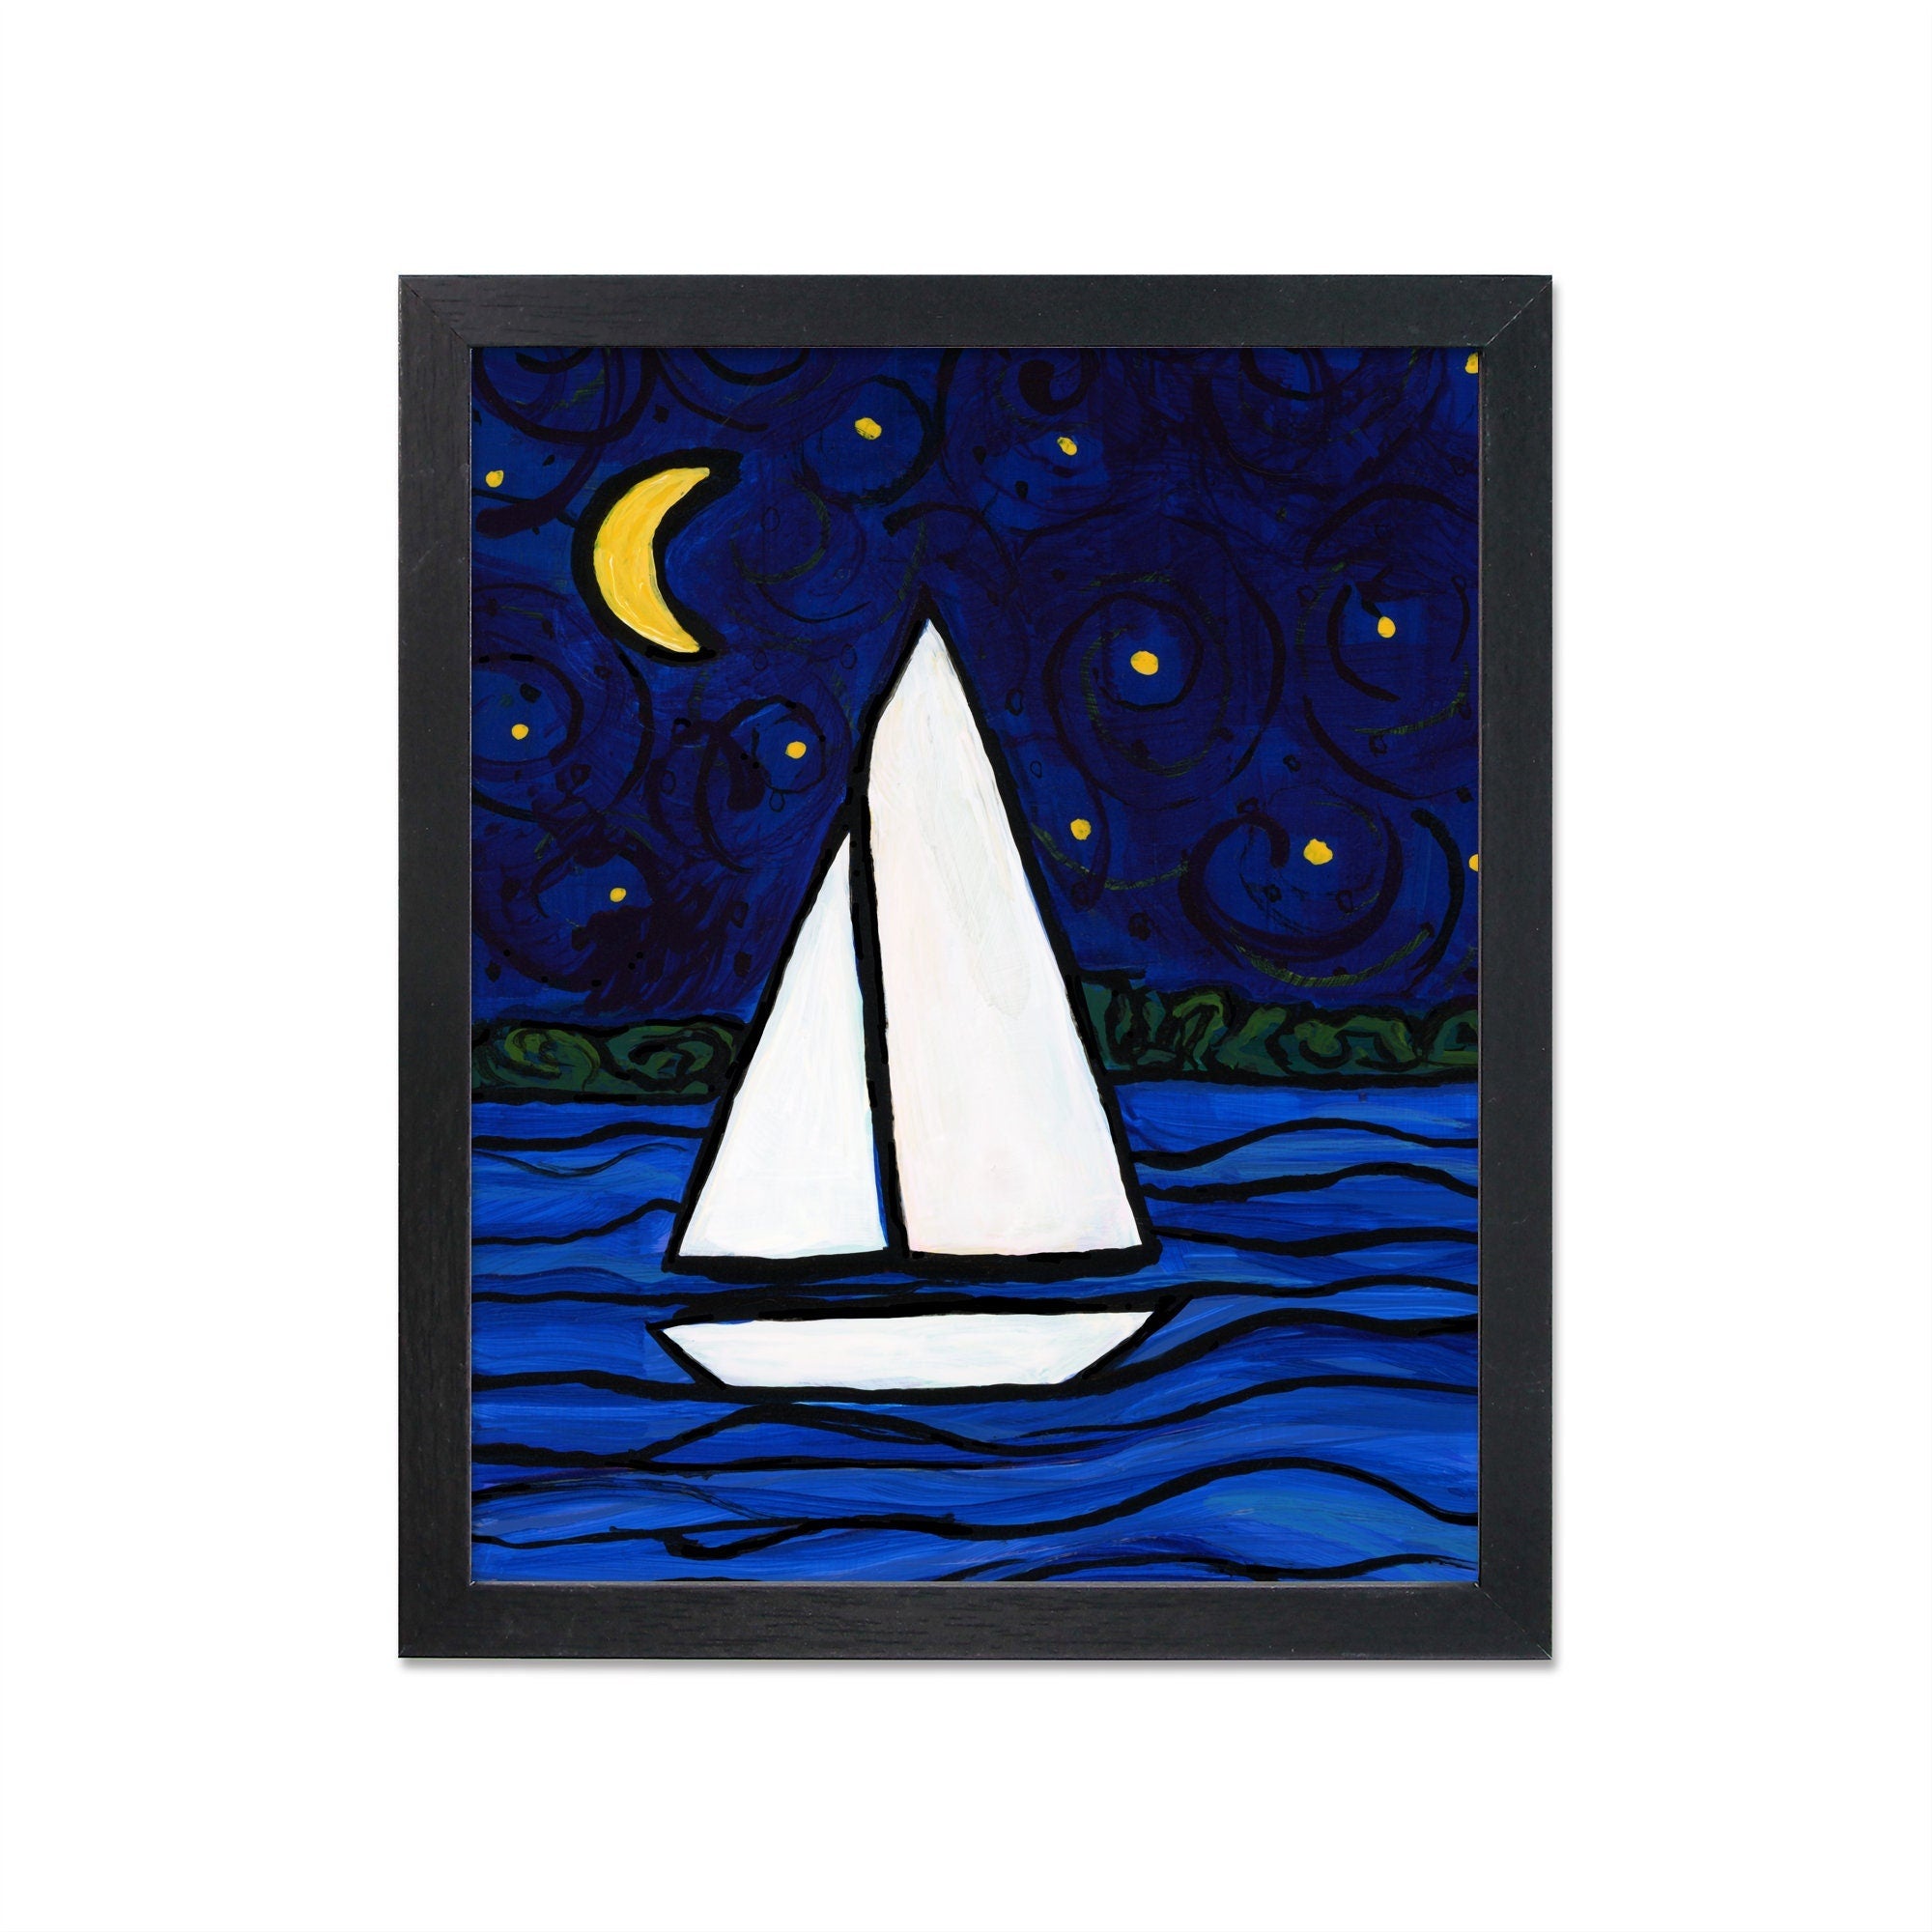 Sailboat Art Print - Night Sail - Nautical Decor - Wall Art for Sailing Theme, Beach House, Lake House, or Vacation Home - 8 x 10 Inches